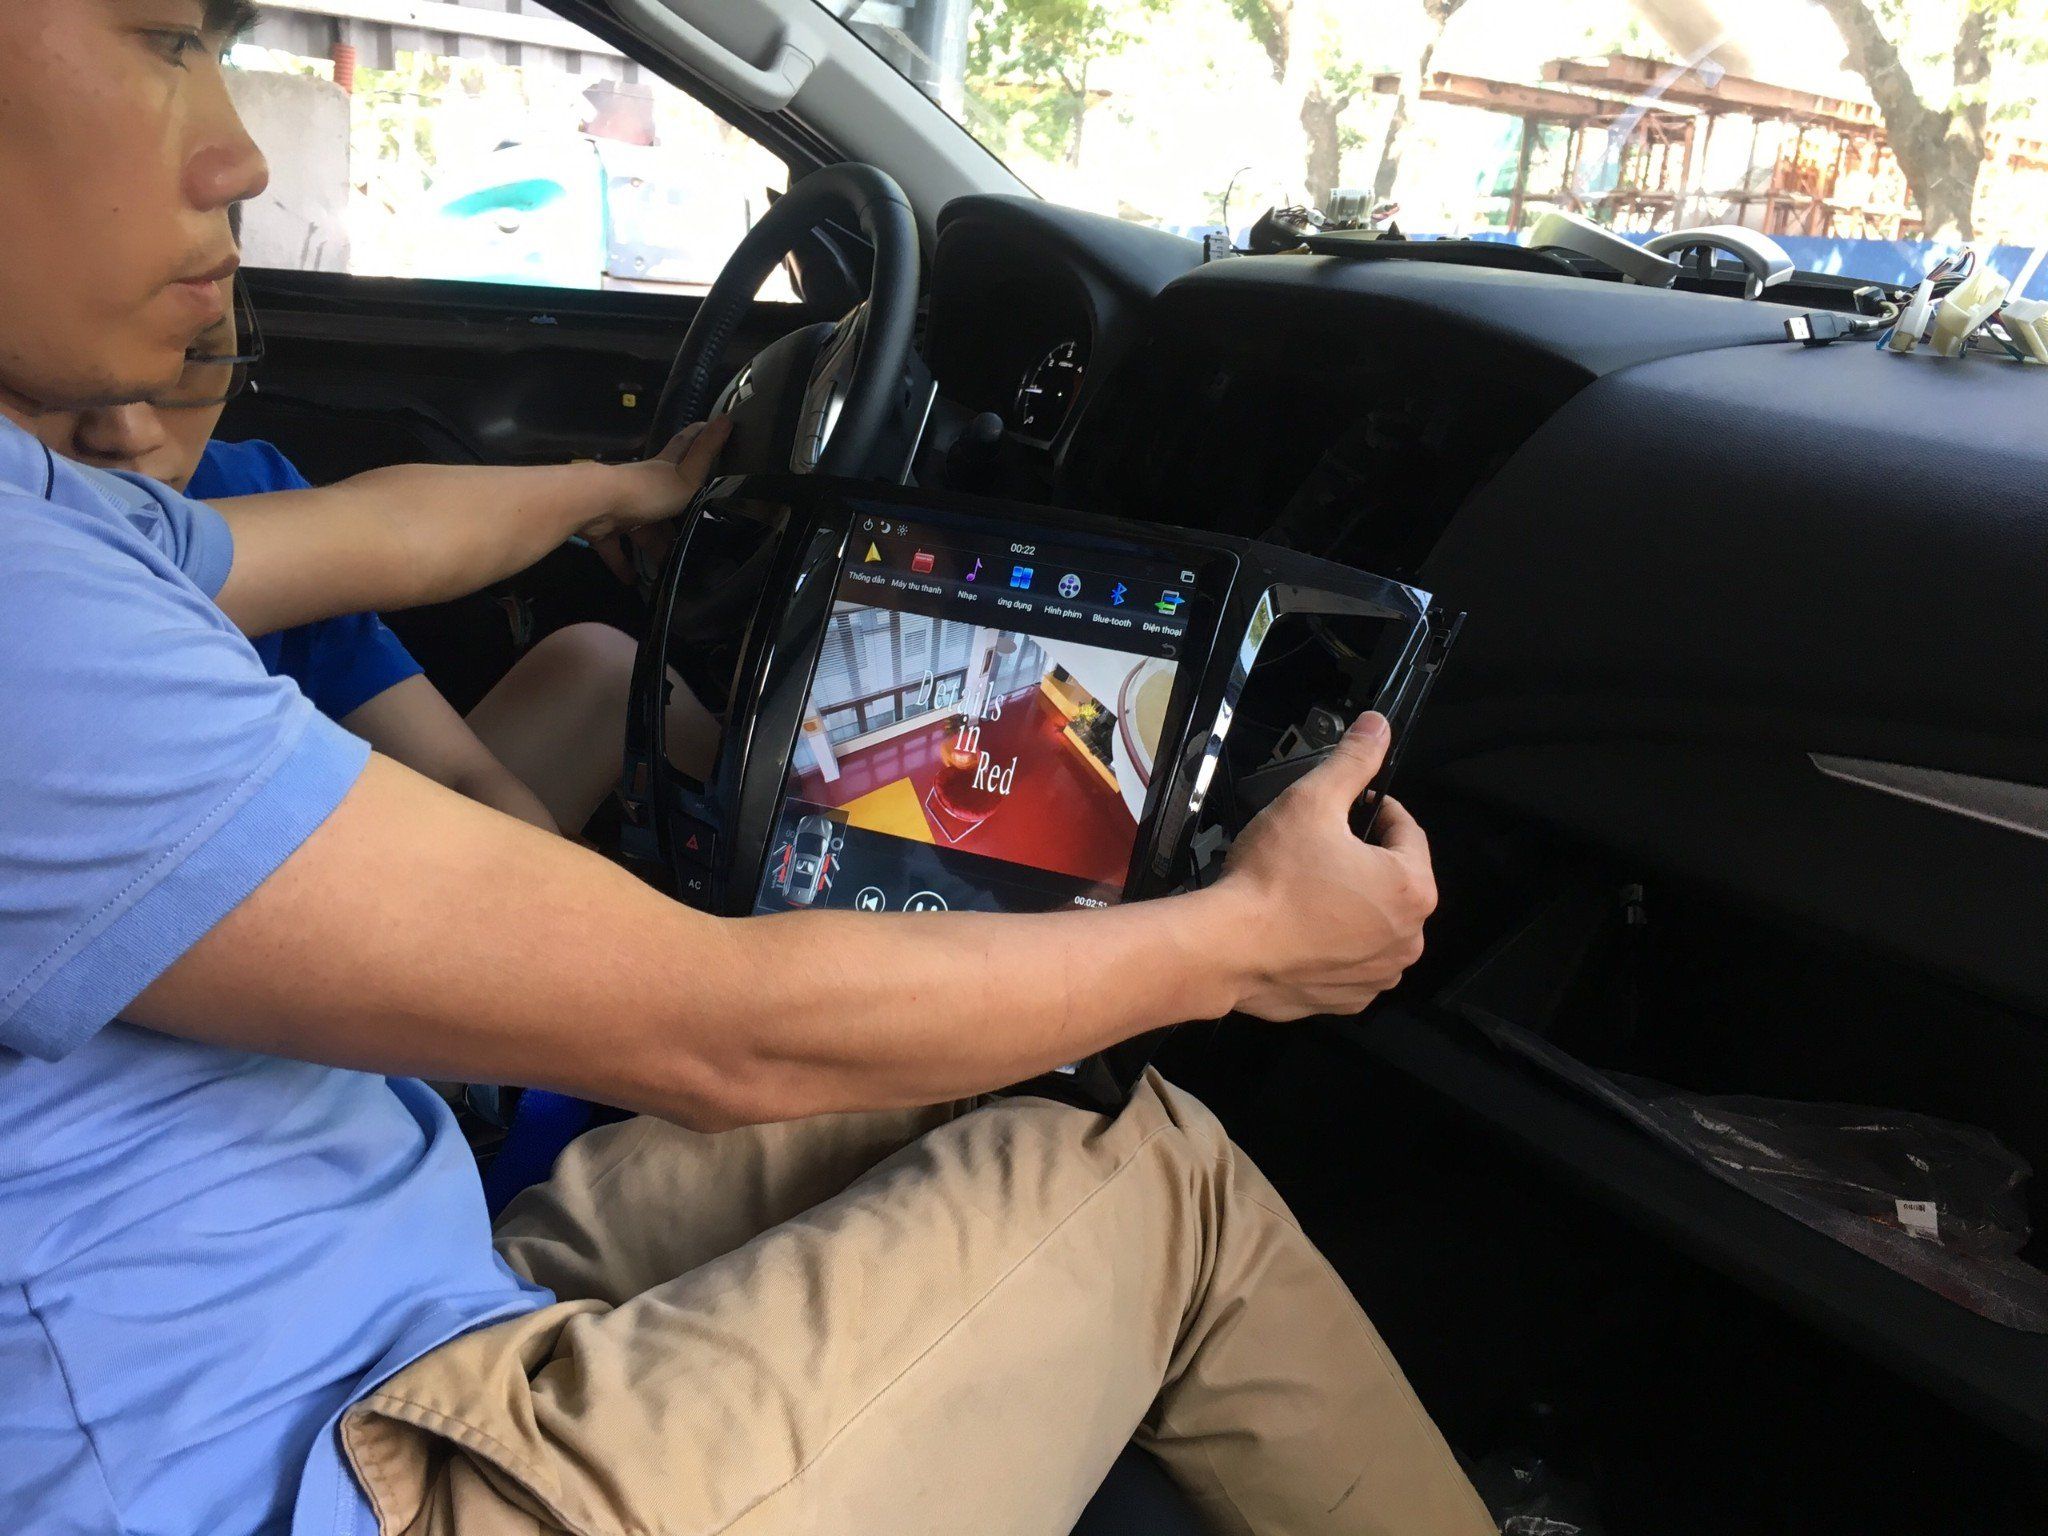 Màn hình Tesla Kiri xe Mitsubishi Pajero Sport 2016+ Android 7.1 - 12.1 inchs